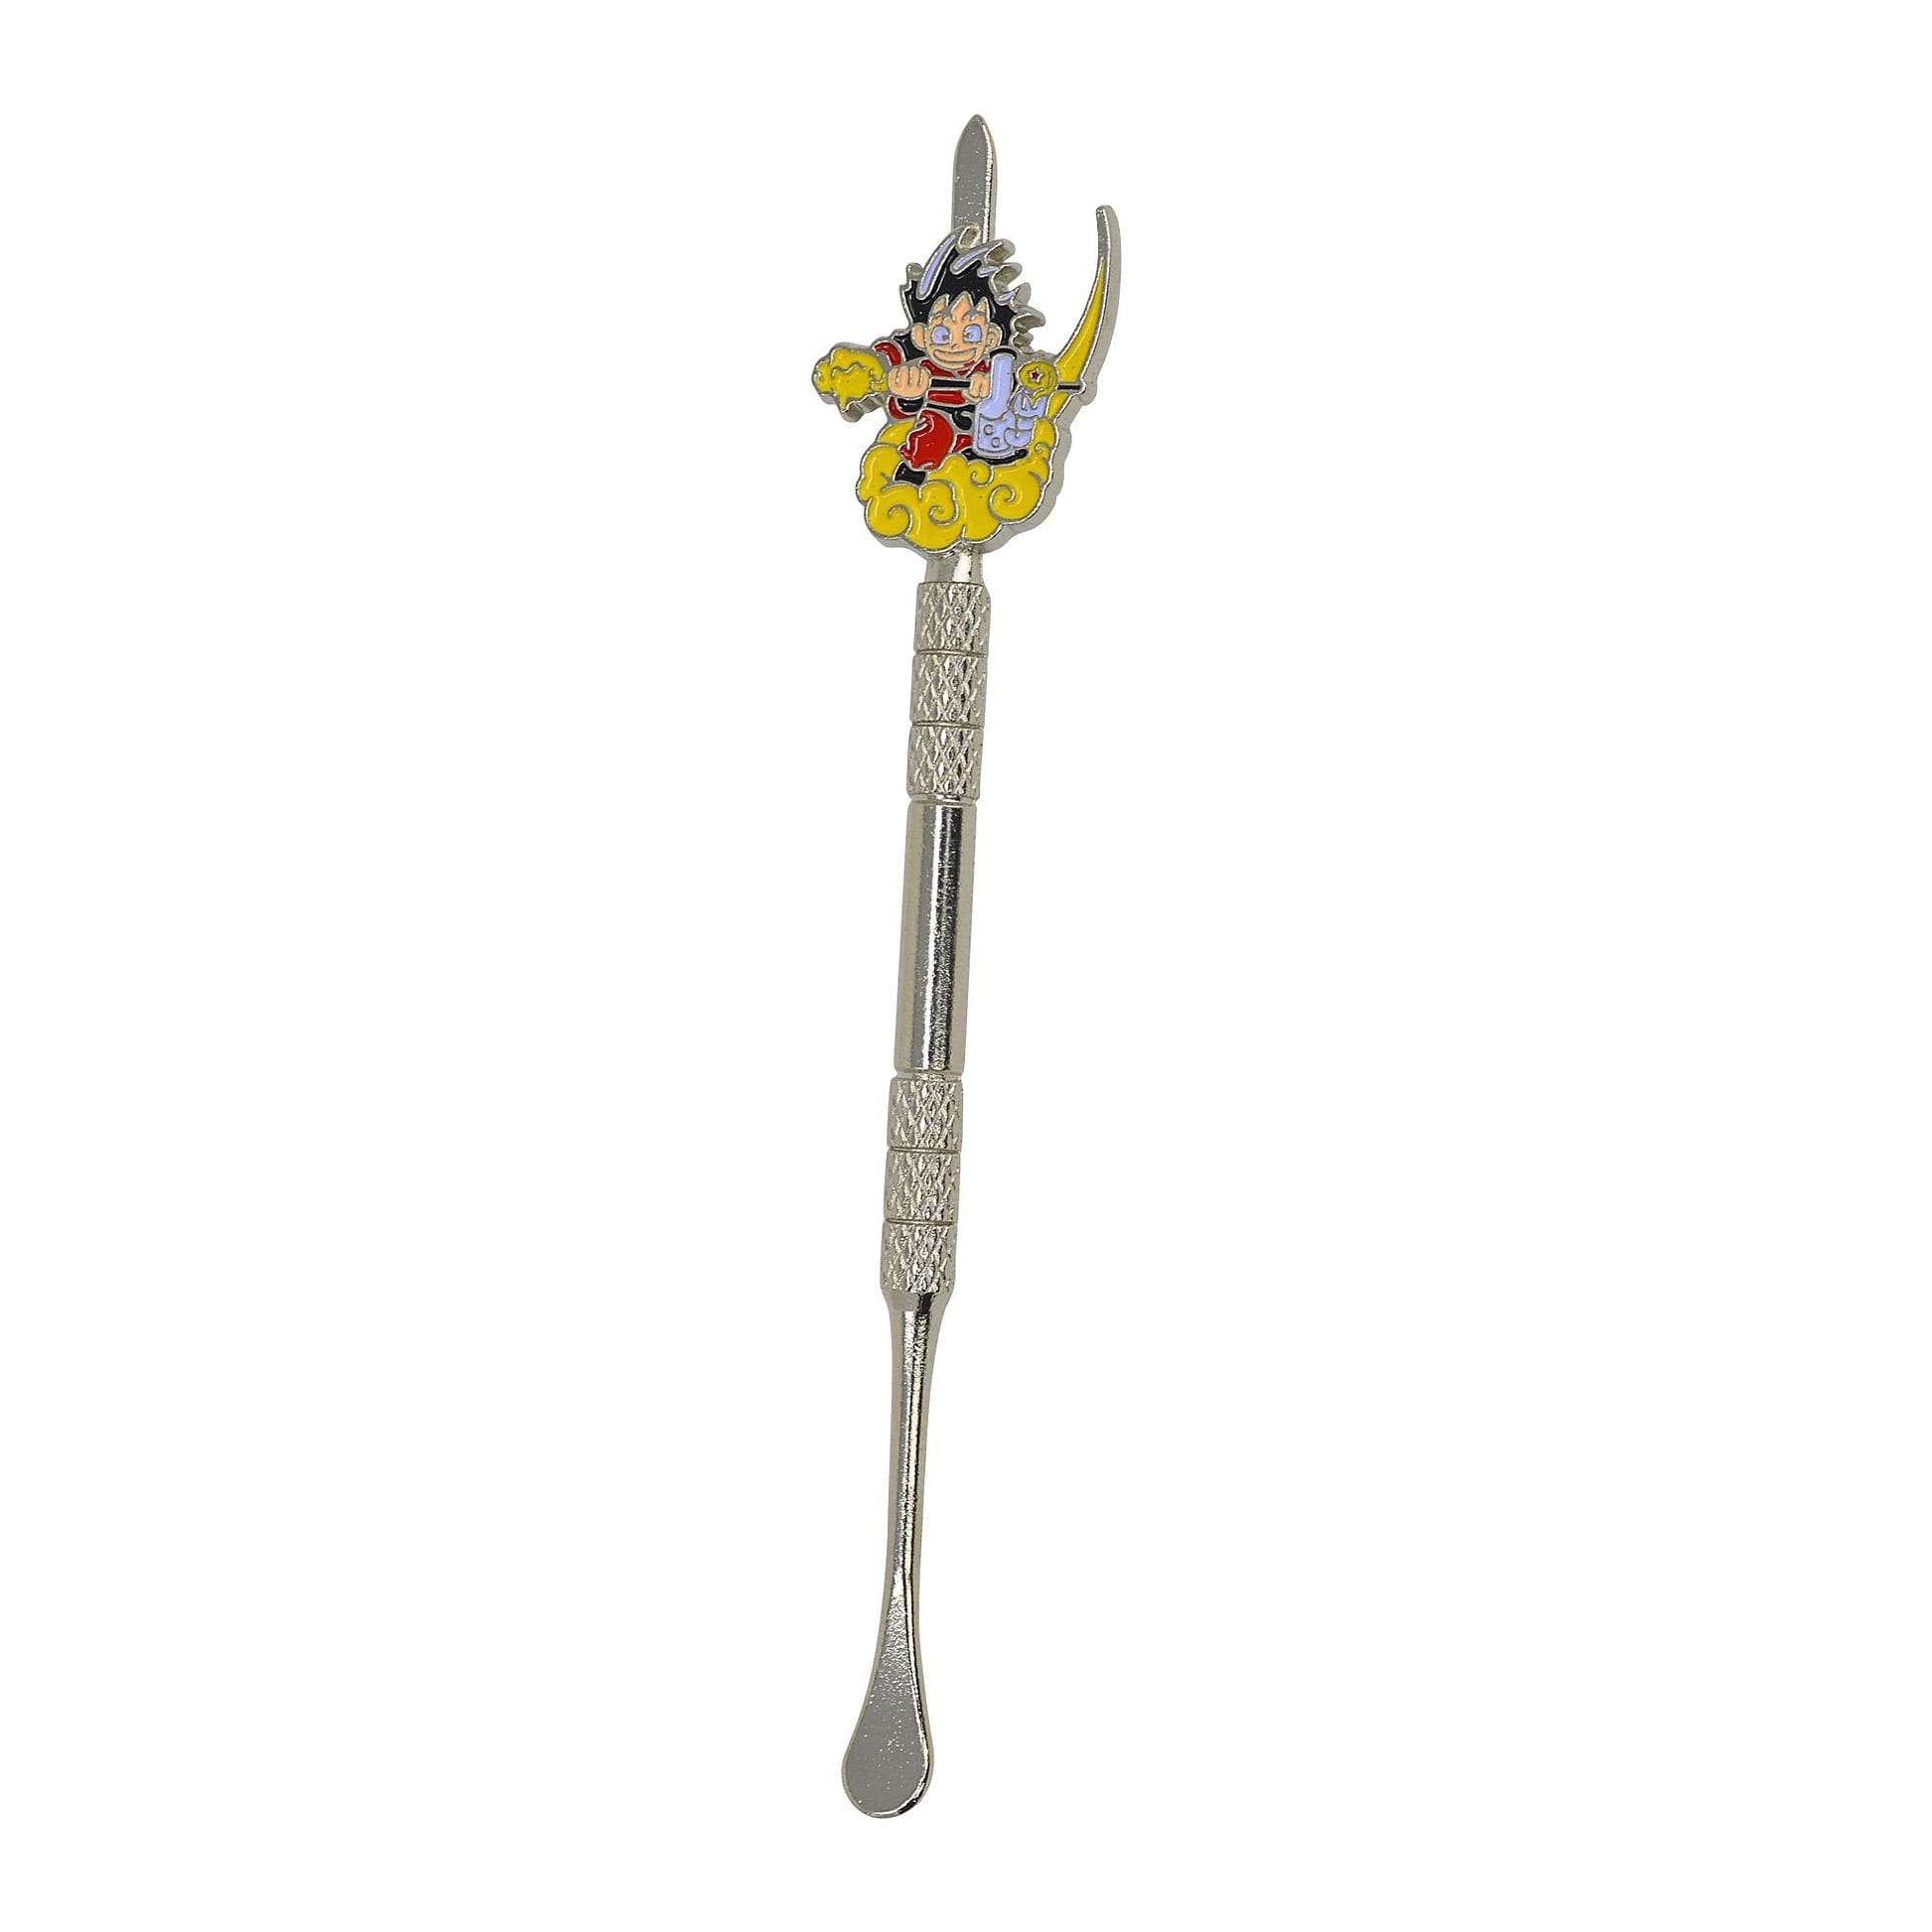 Long metal dab tool smoking accessory dabber textured middle part Dragon Ball Z Nimbus Goku's whole body design on handle